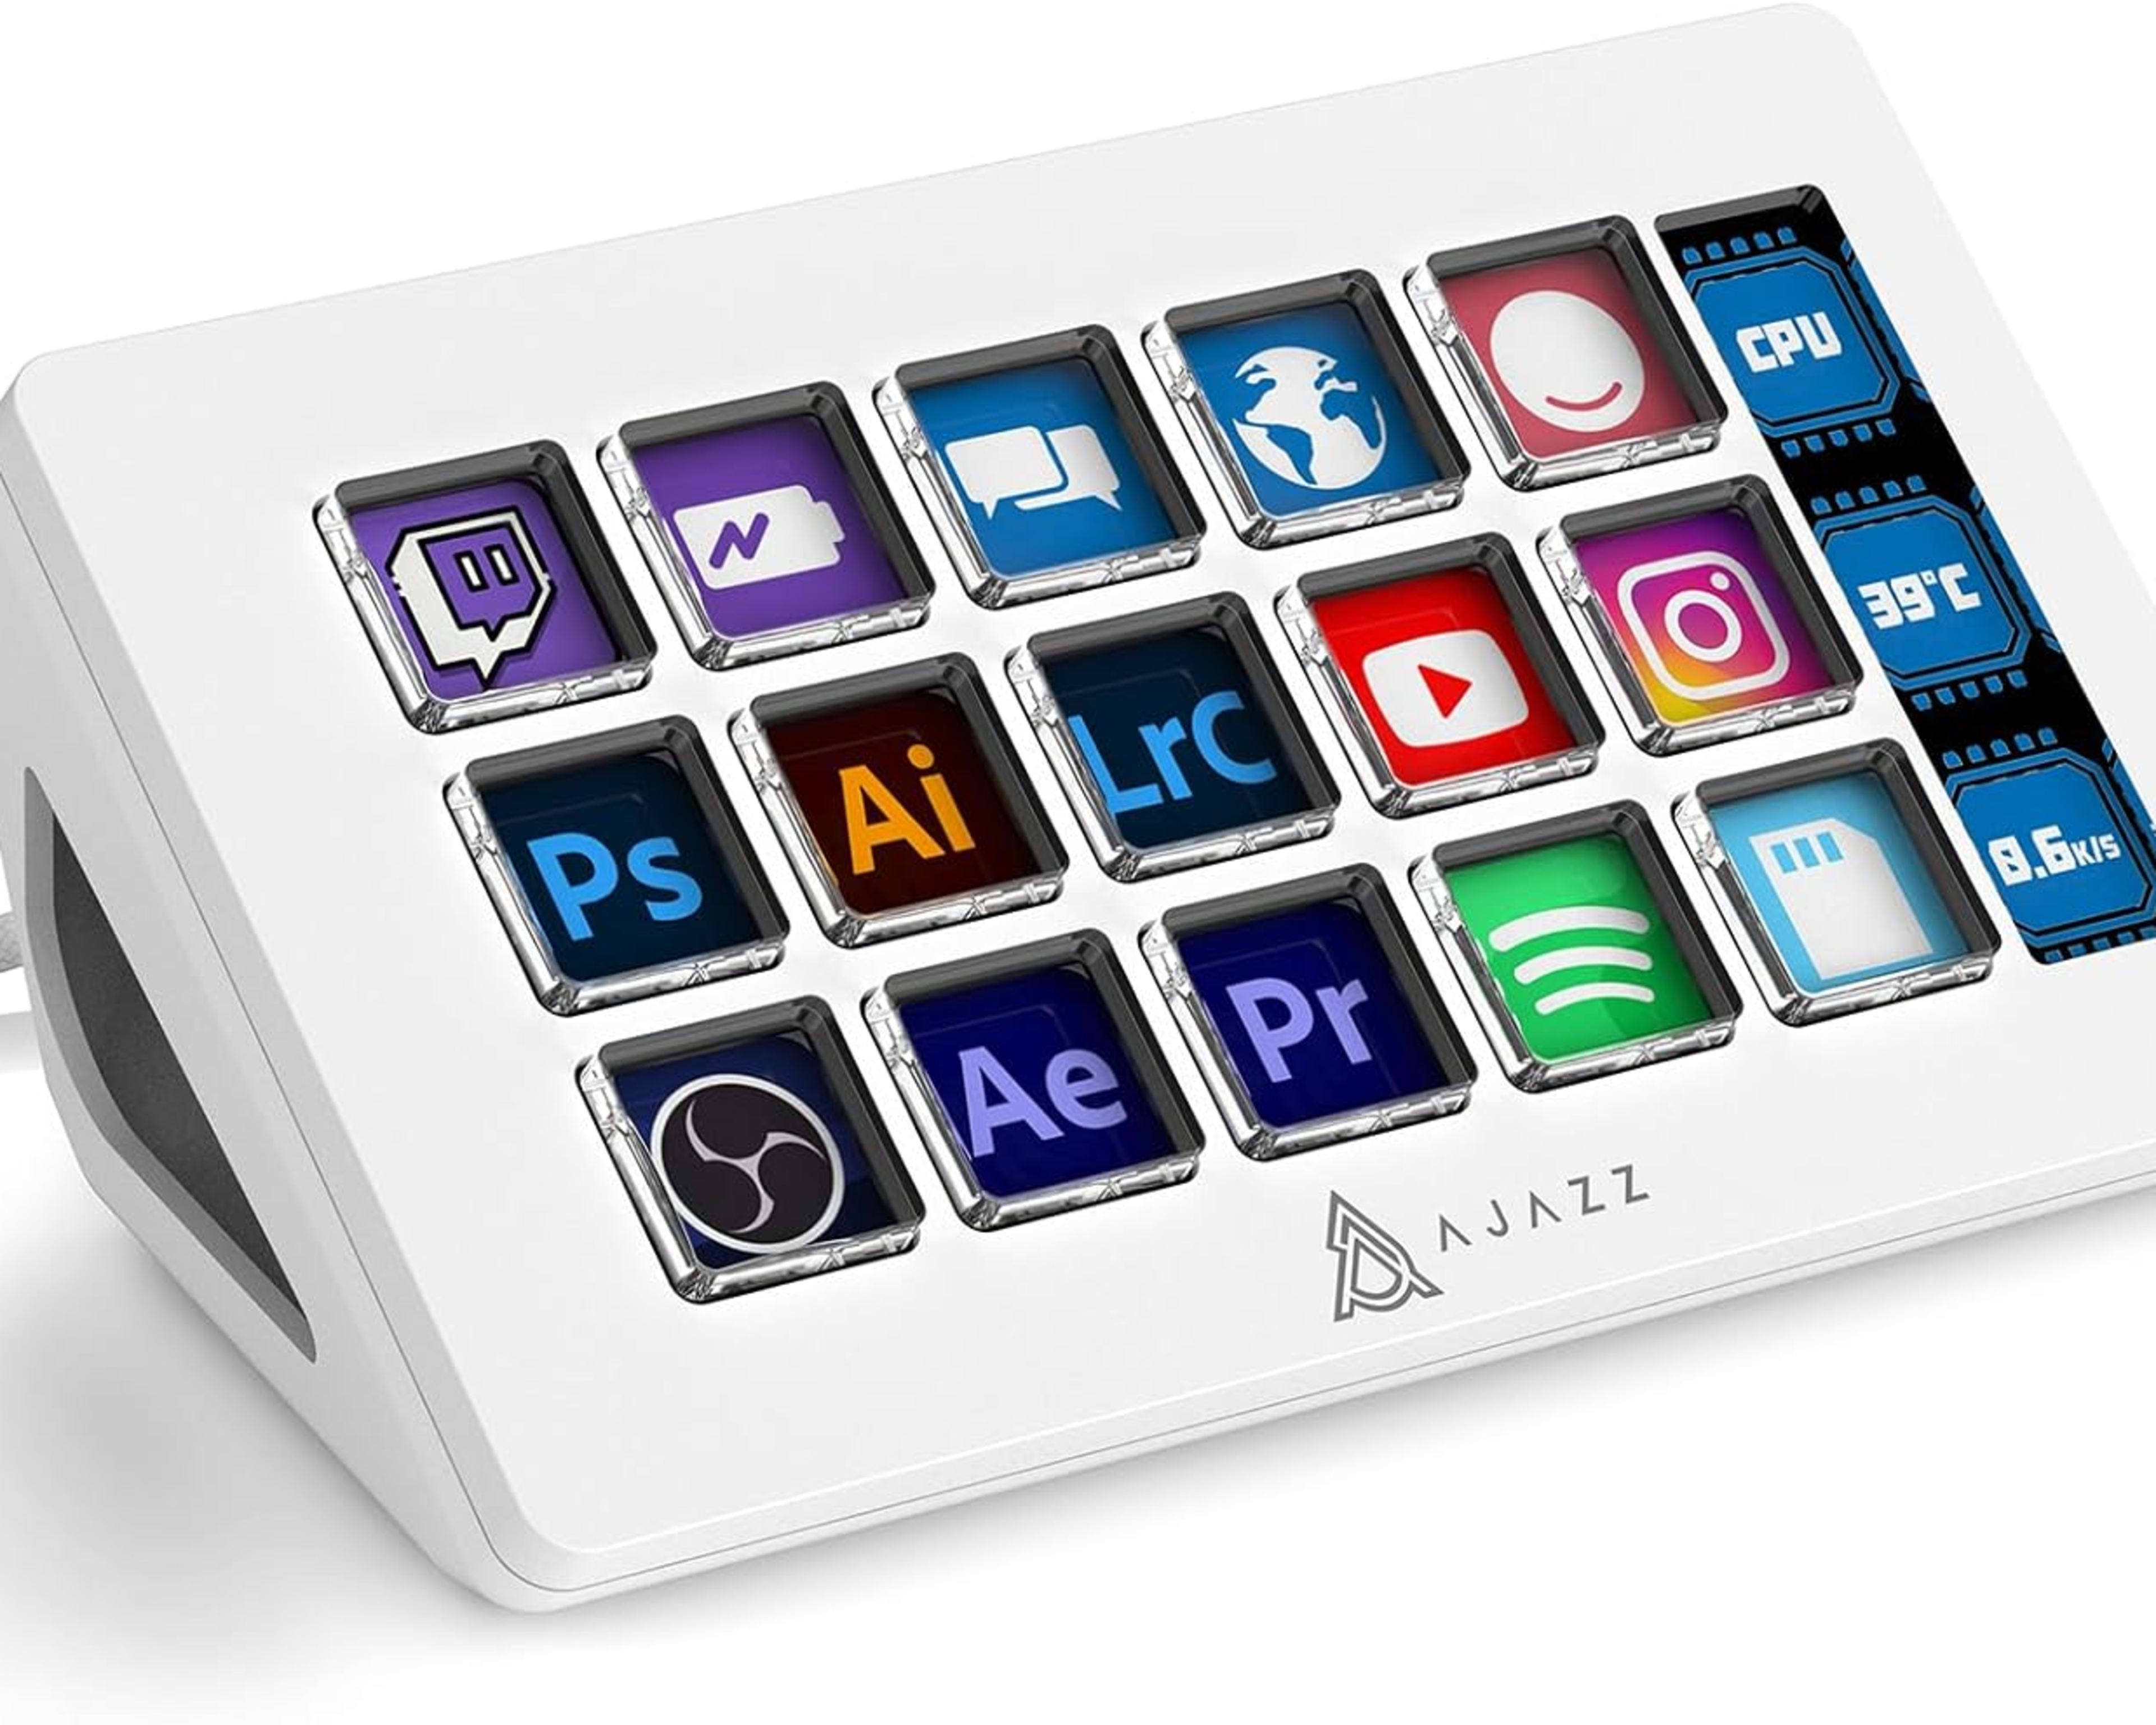 A.JAZZ AKP153 Stream Studio Controller Keypad Type-c Wired with 15 Macro LCD Key